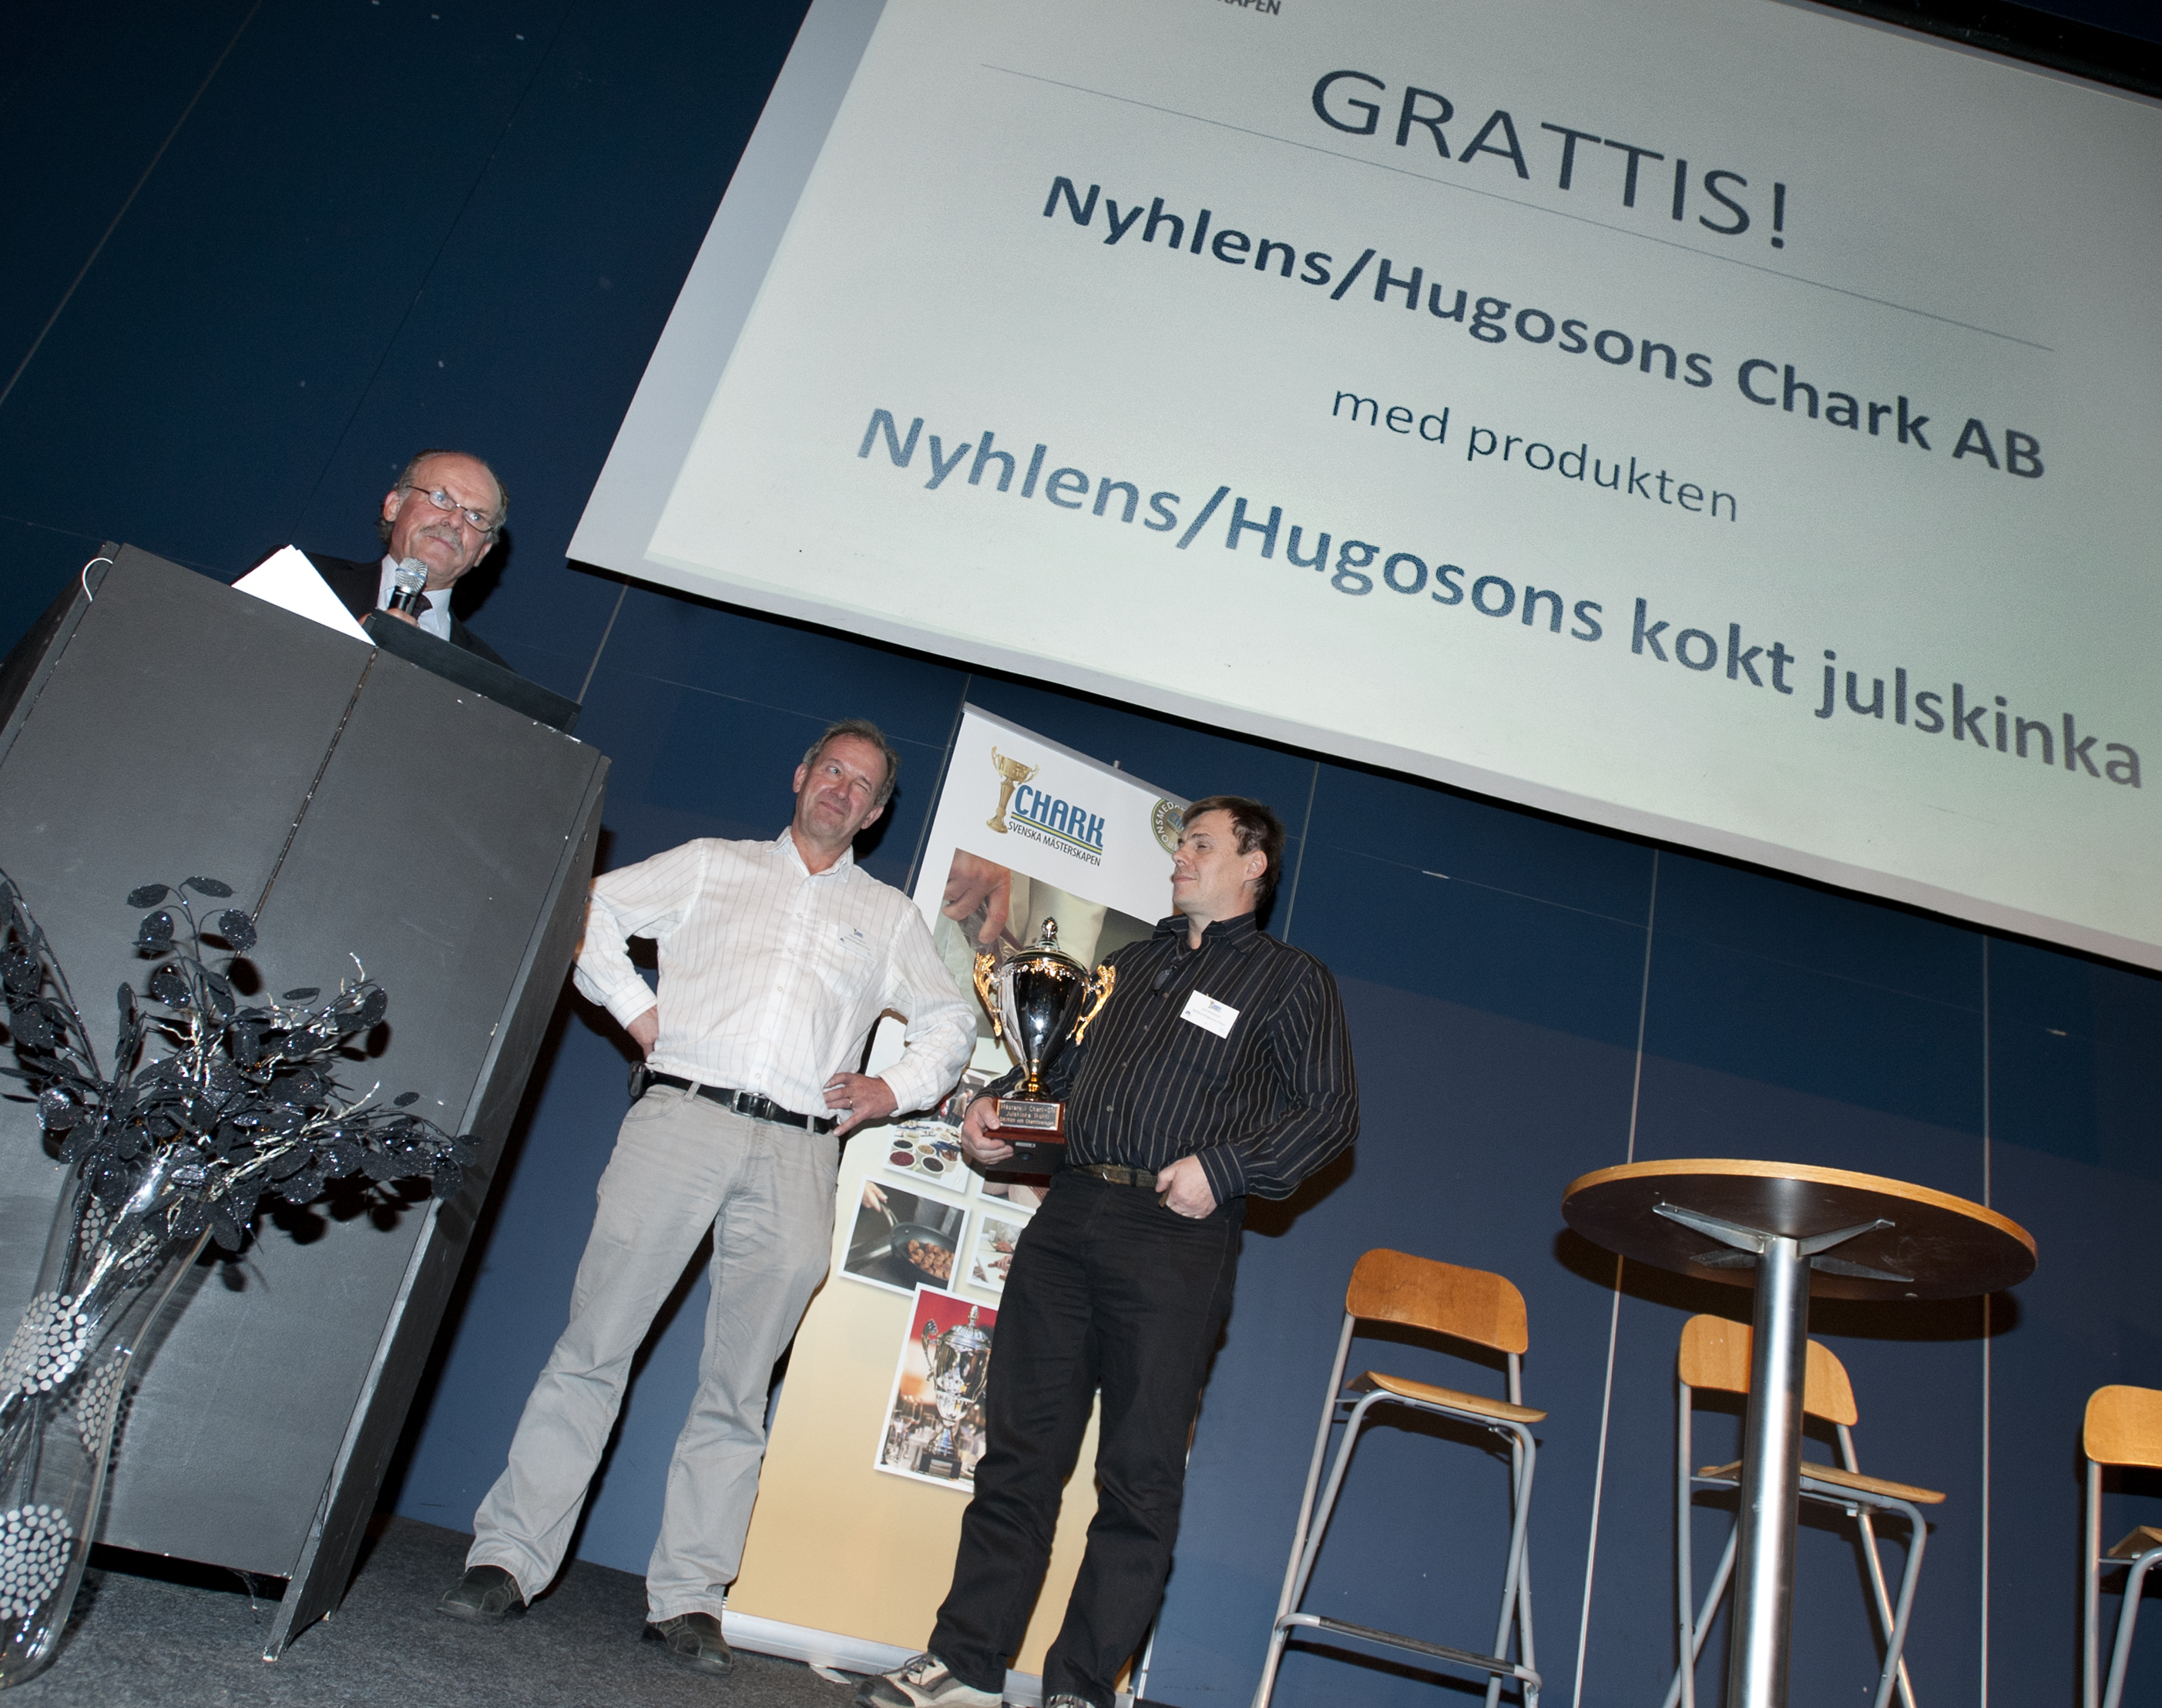 <p><strong>Sveriges bästa julskinka. NyhlénsHugoson var vinnare med produkten ”NyhlénsHugoson kokt skinka”</strong></p>
<p>Mikael Hugoson, vd, och Leif Johansson, plastchef på NyhlénsHugoson tog emot priset.</p>
